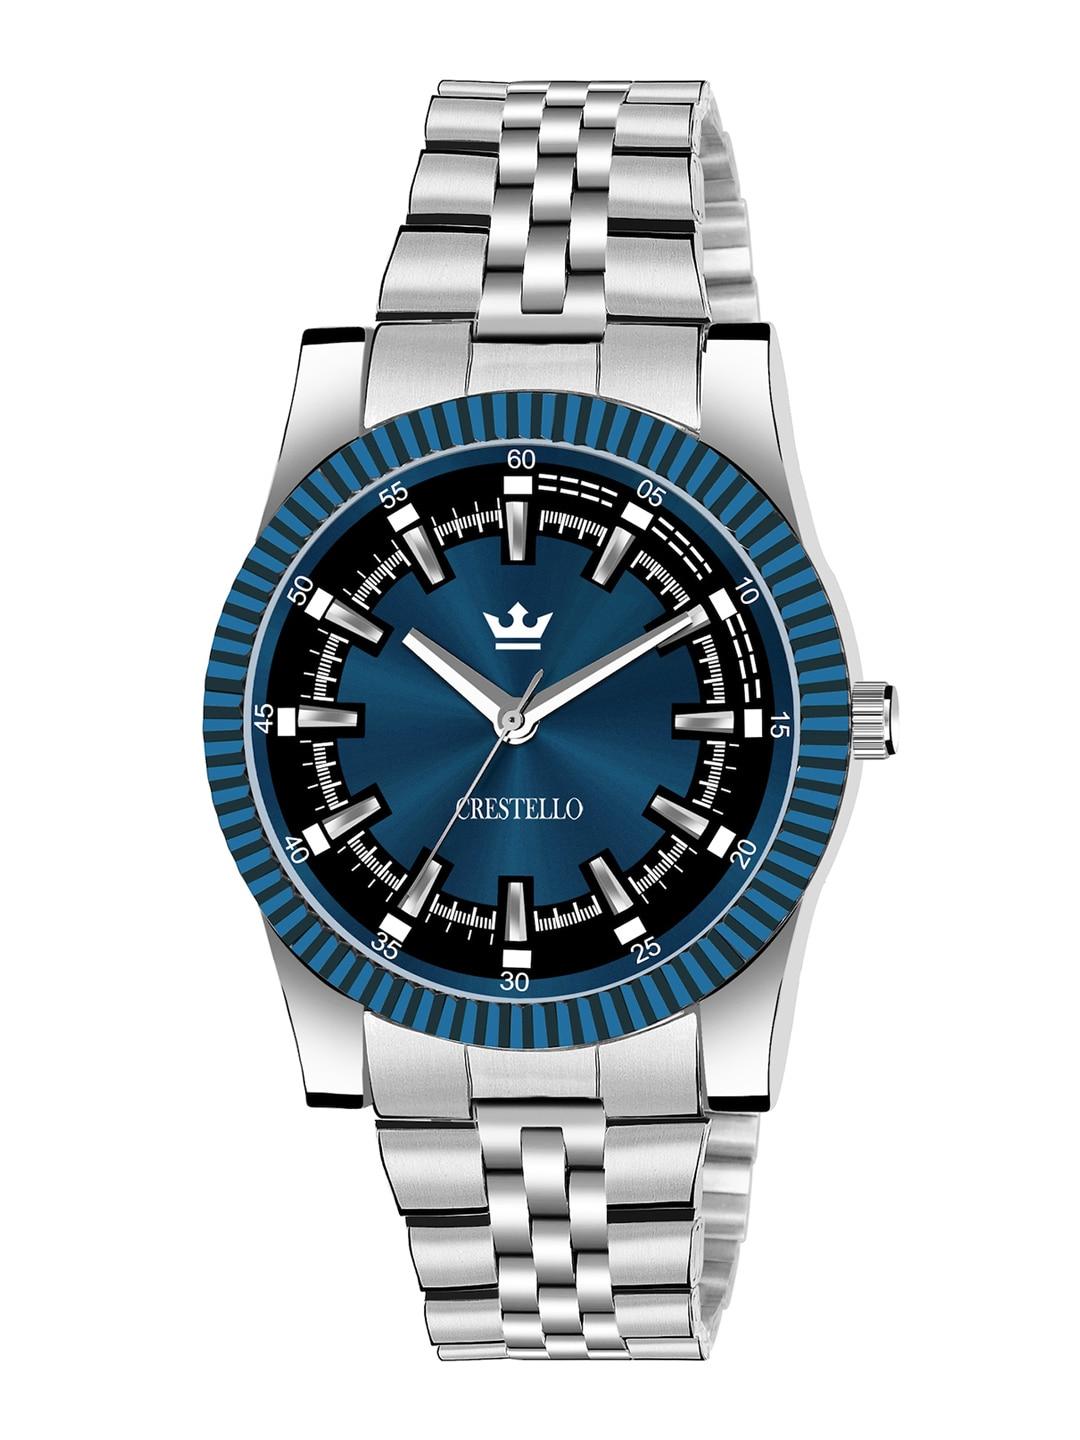 crestello-men-stainless-steel-bracelet-style-straps-analogue-watch-cr-g021-blu-ch